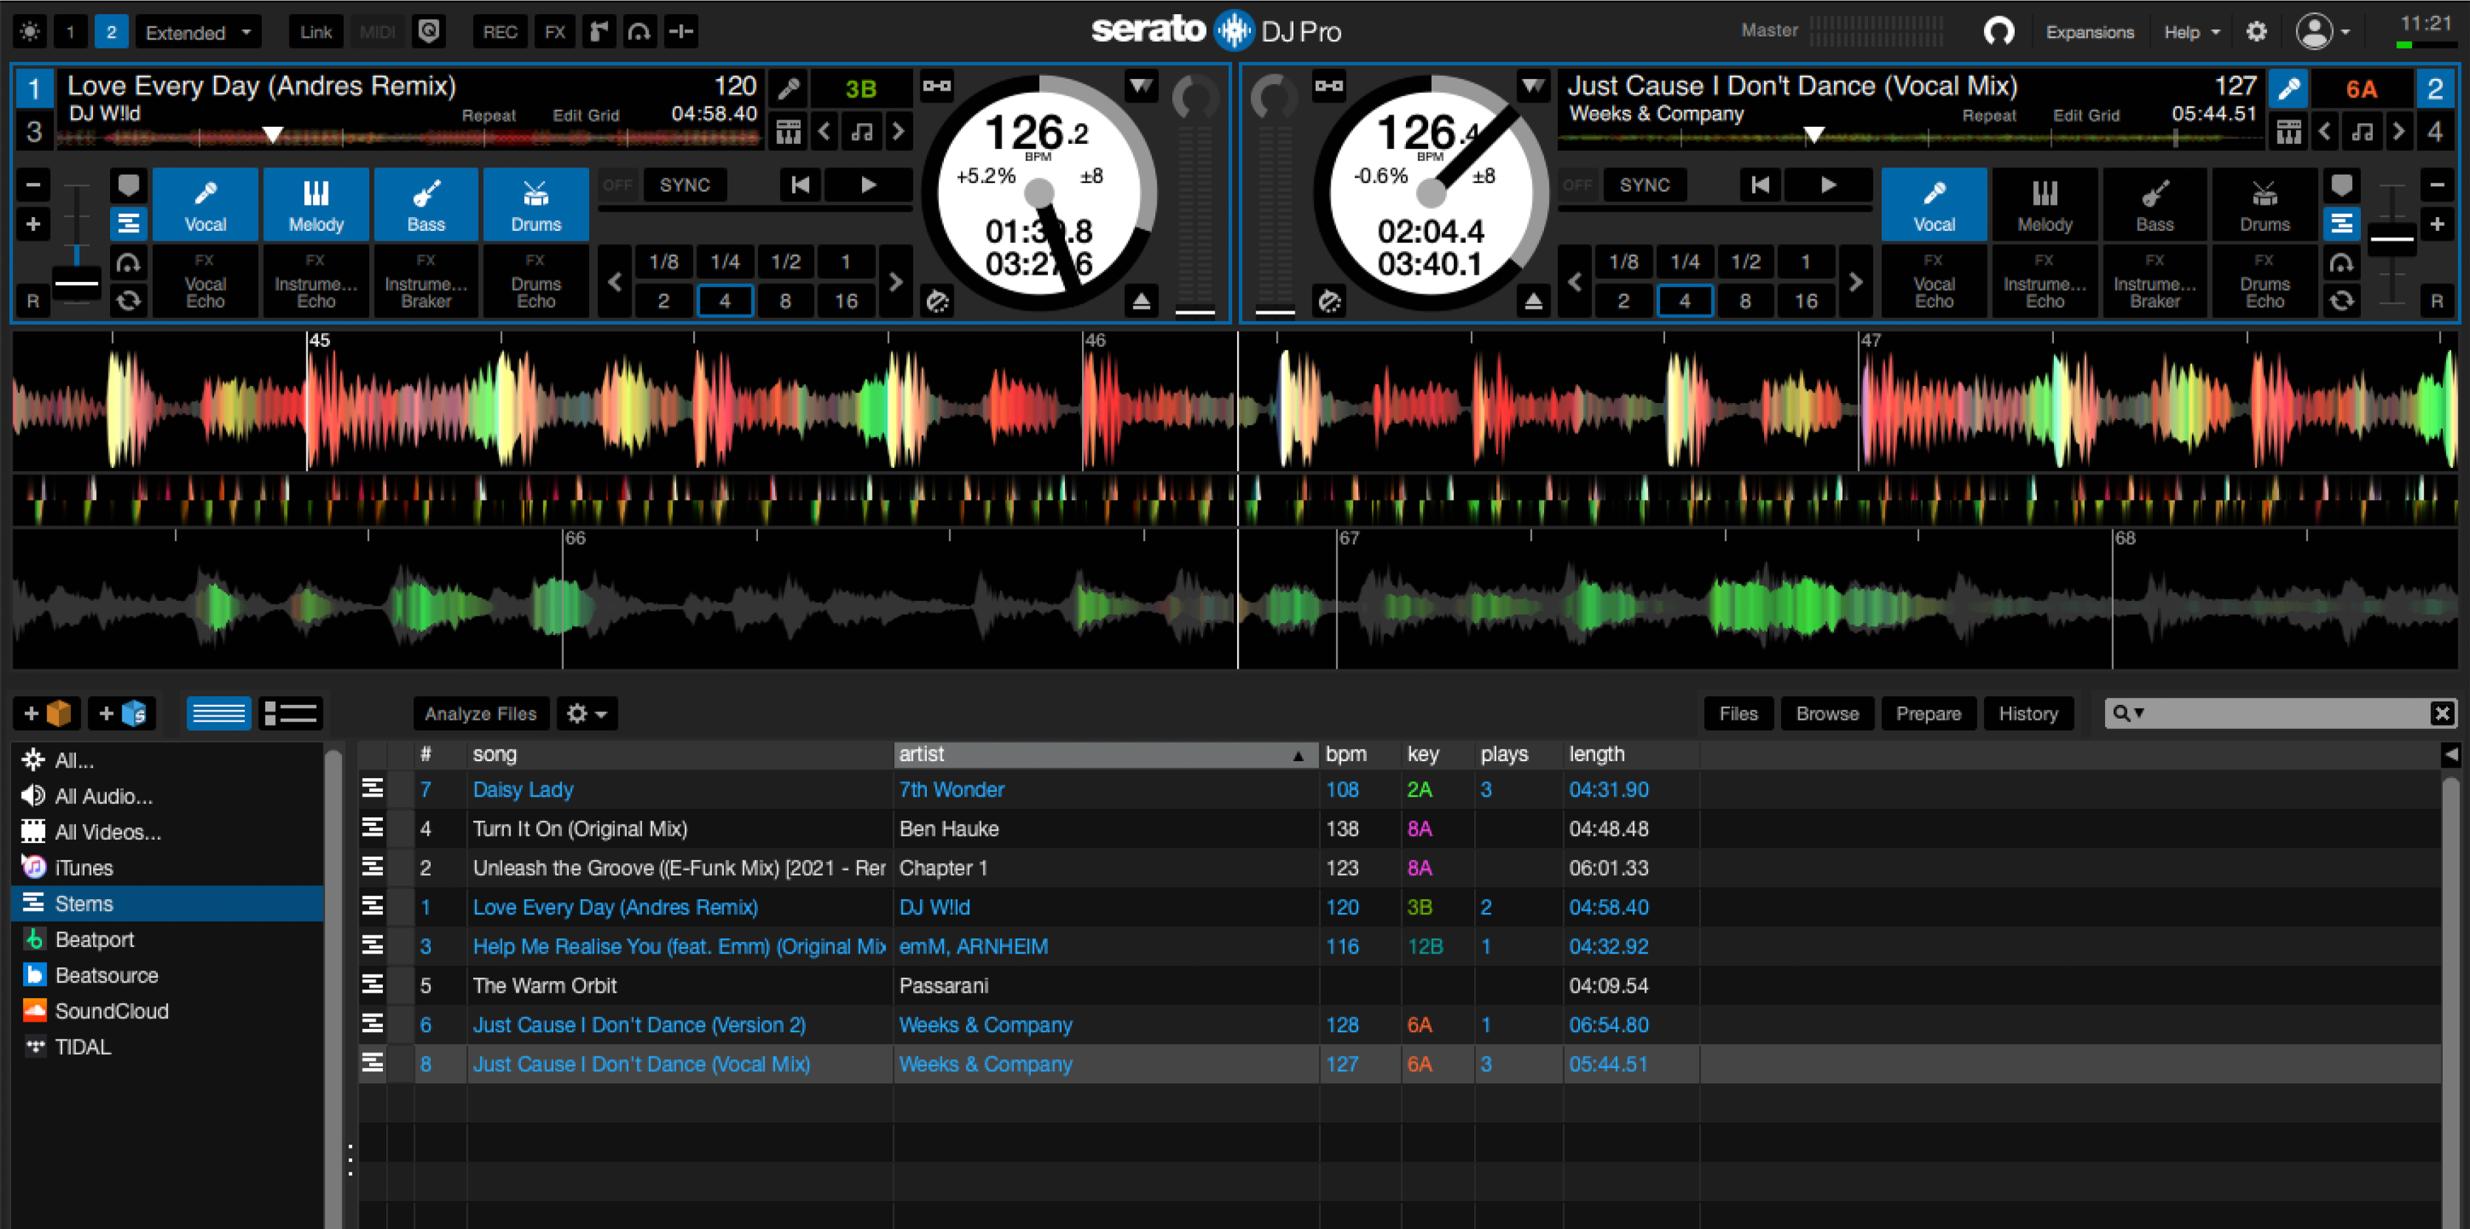 Serato DJ Pro 3.0.10.164 downloading